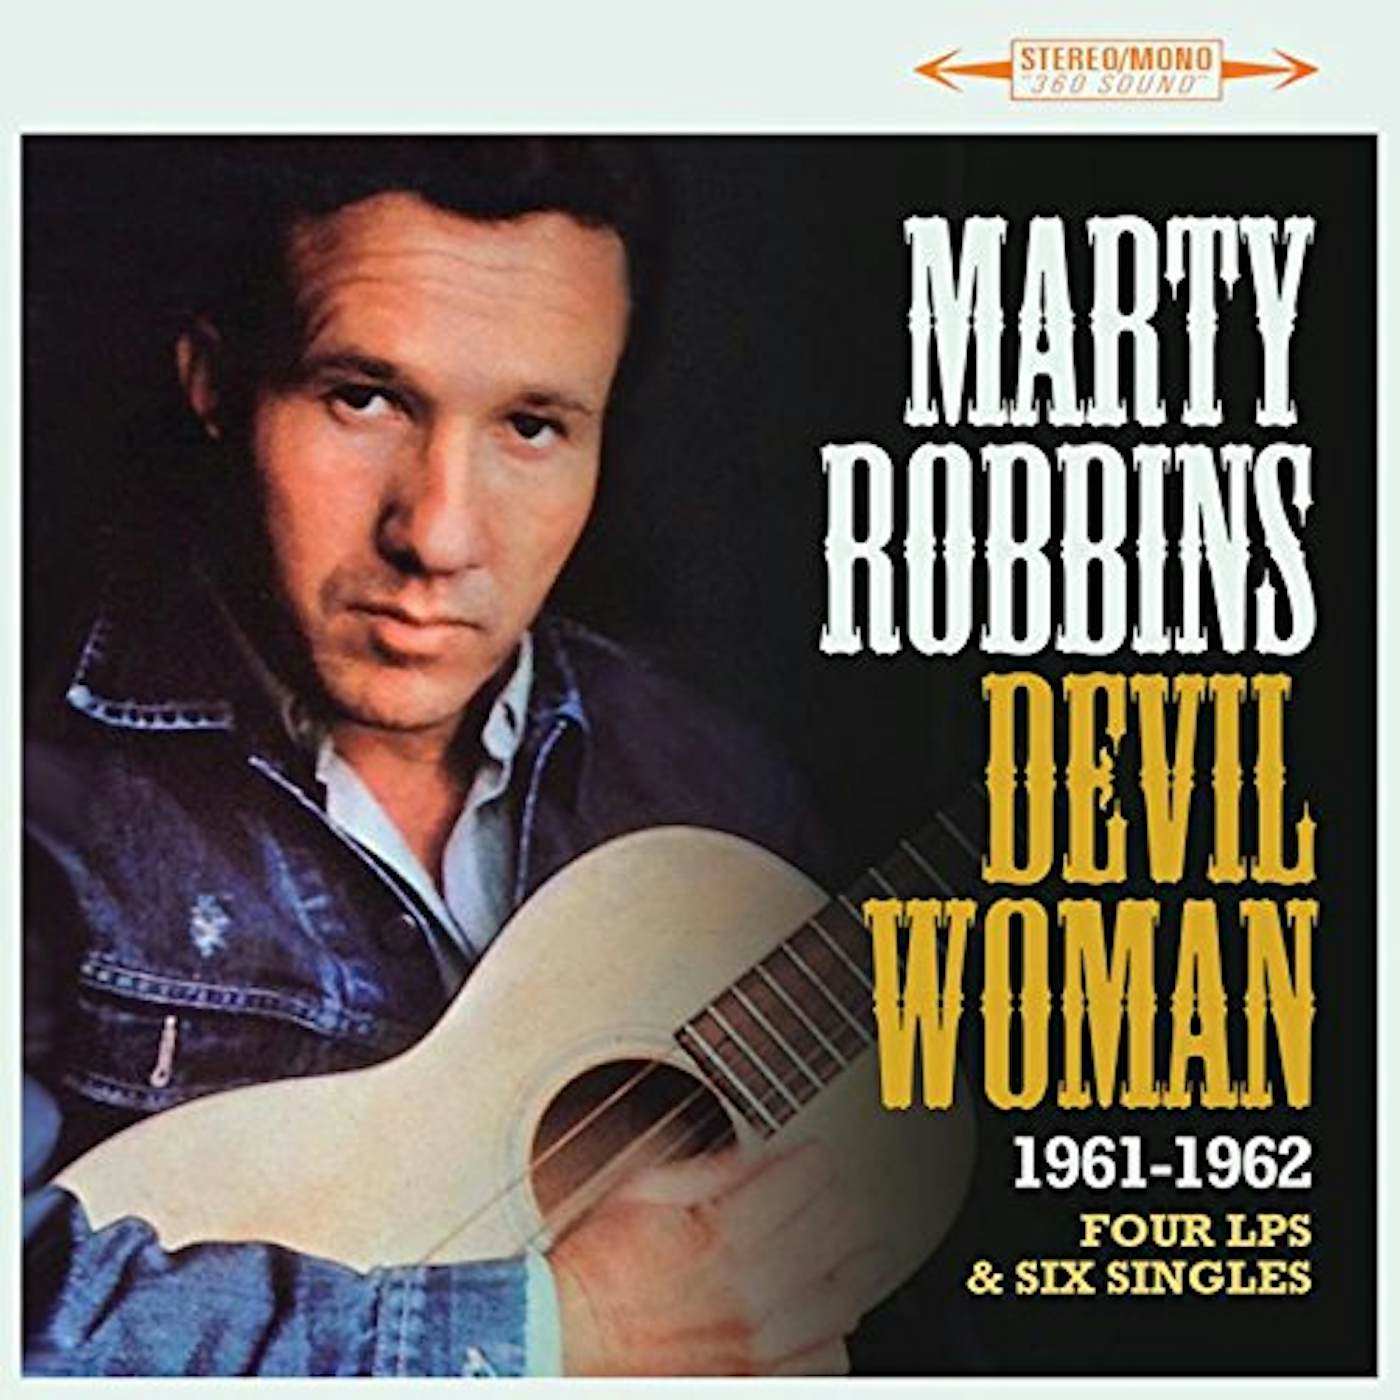 Marty Robbins DEVIL WOMAN: FOUR LPS & SIX SINGLES 1961-1962 CD